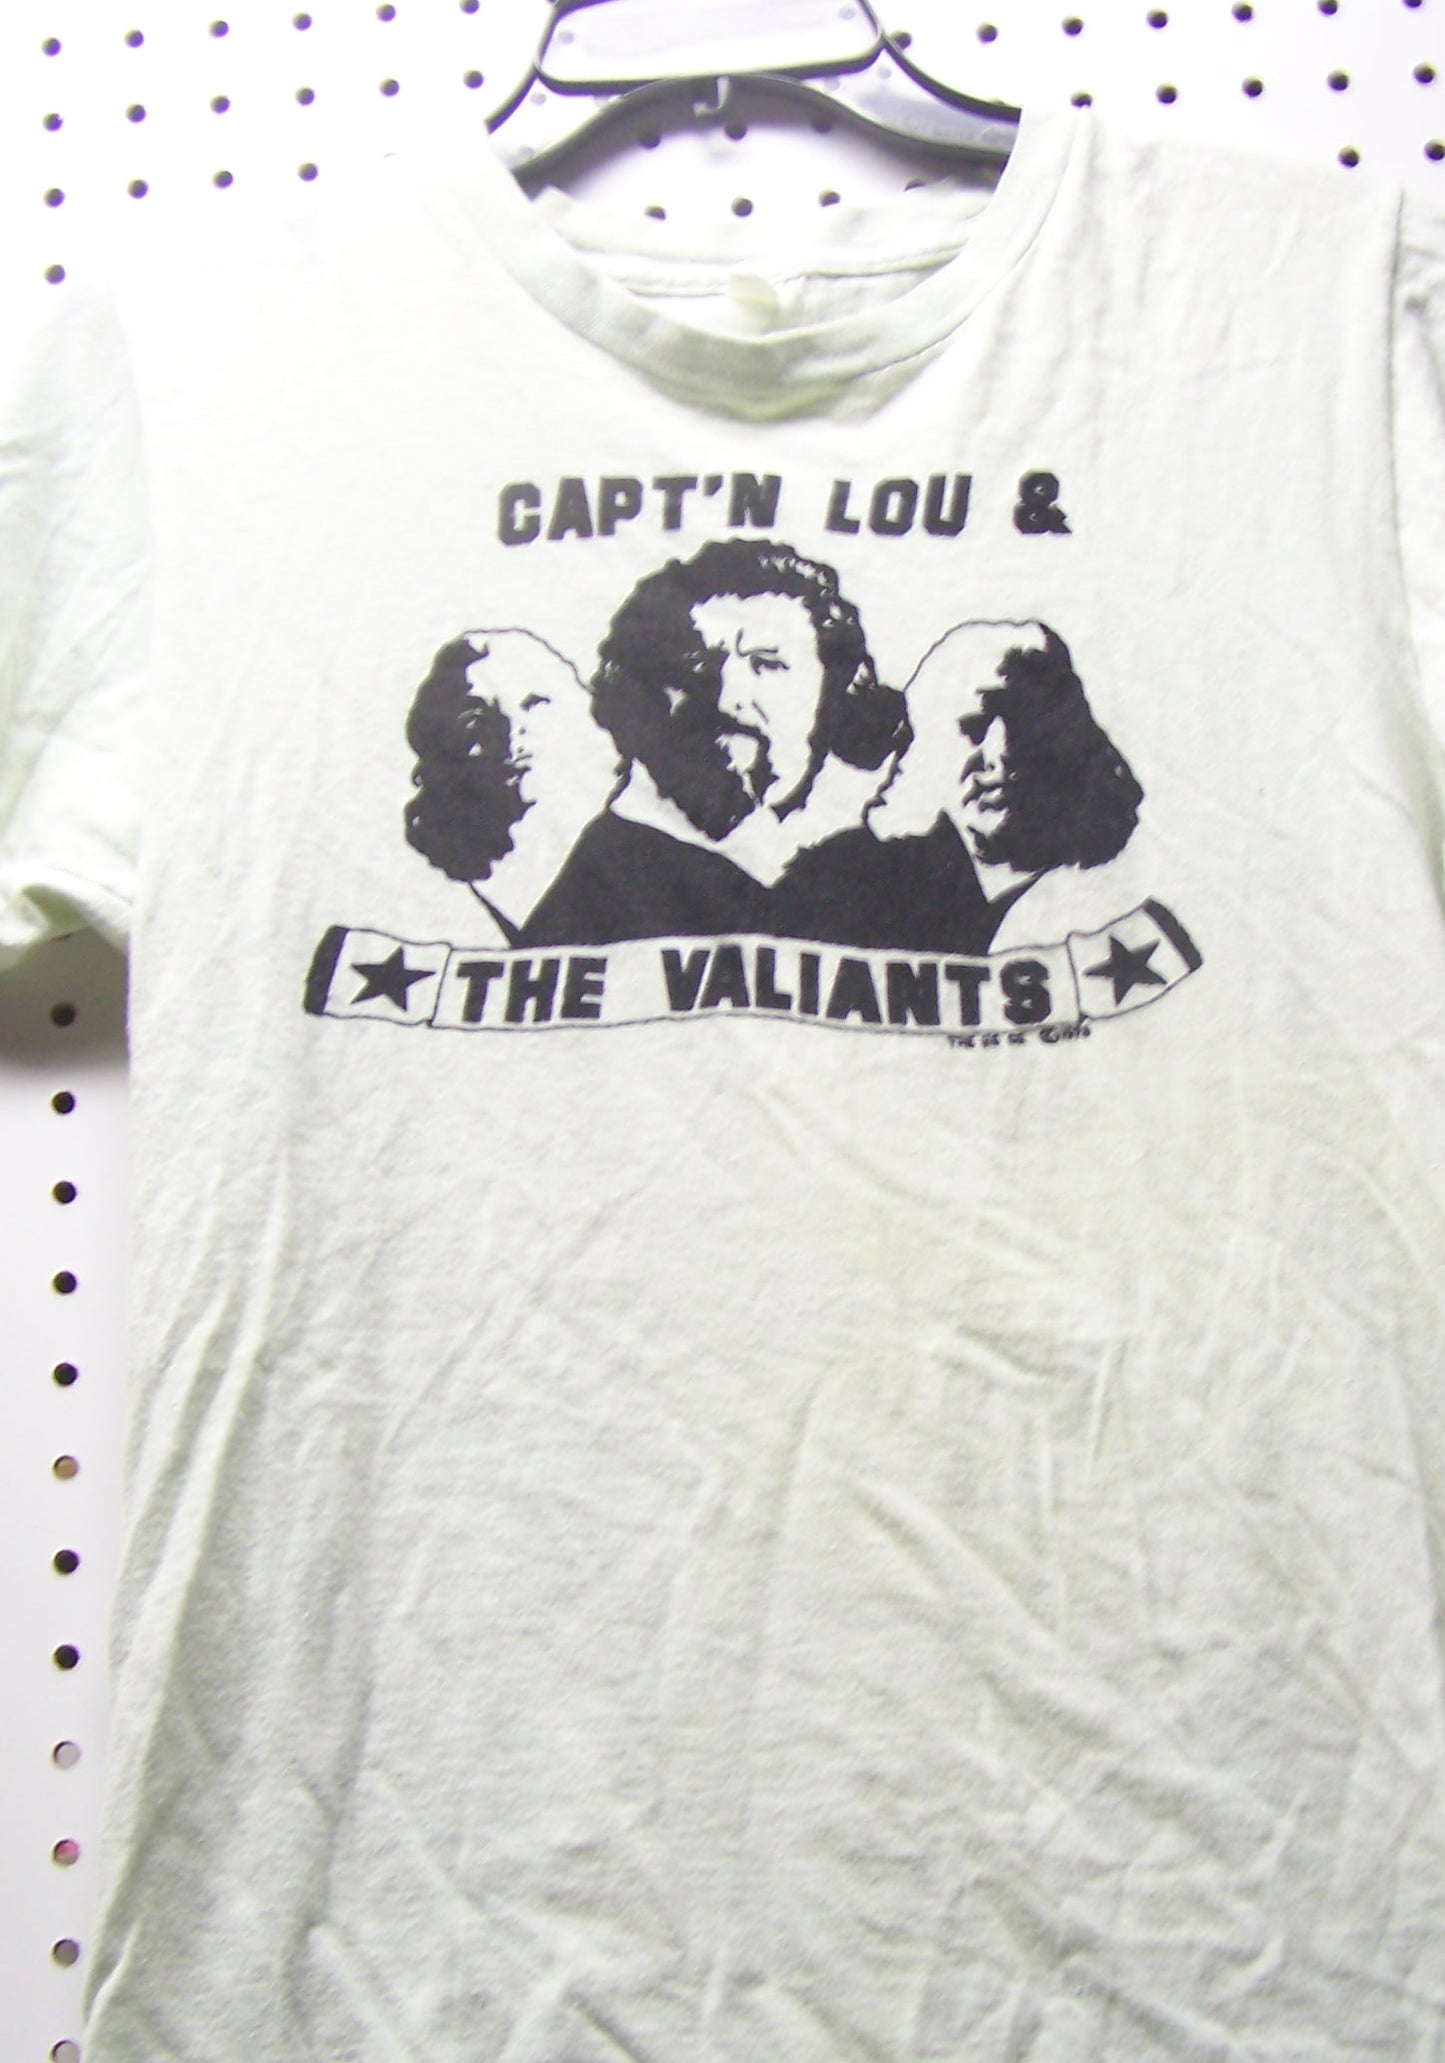 BAT6  Capt Lou Albano and the Valiant Brothers   Original Vintage Tee Shirt  Size  M